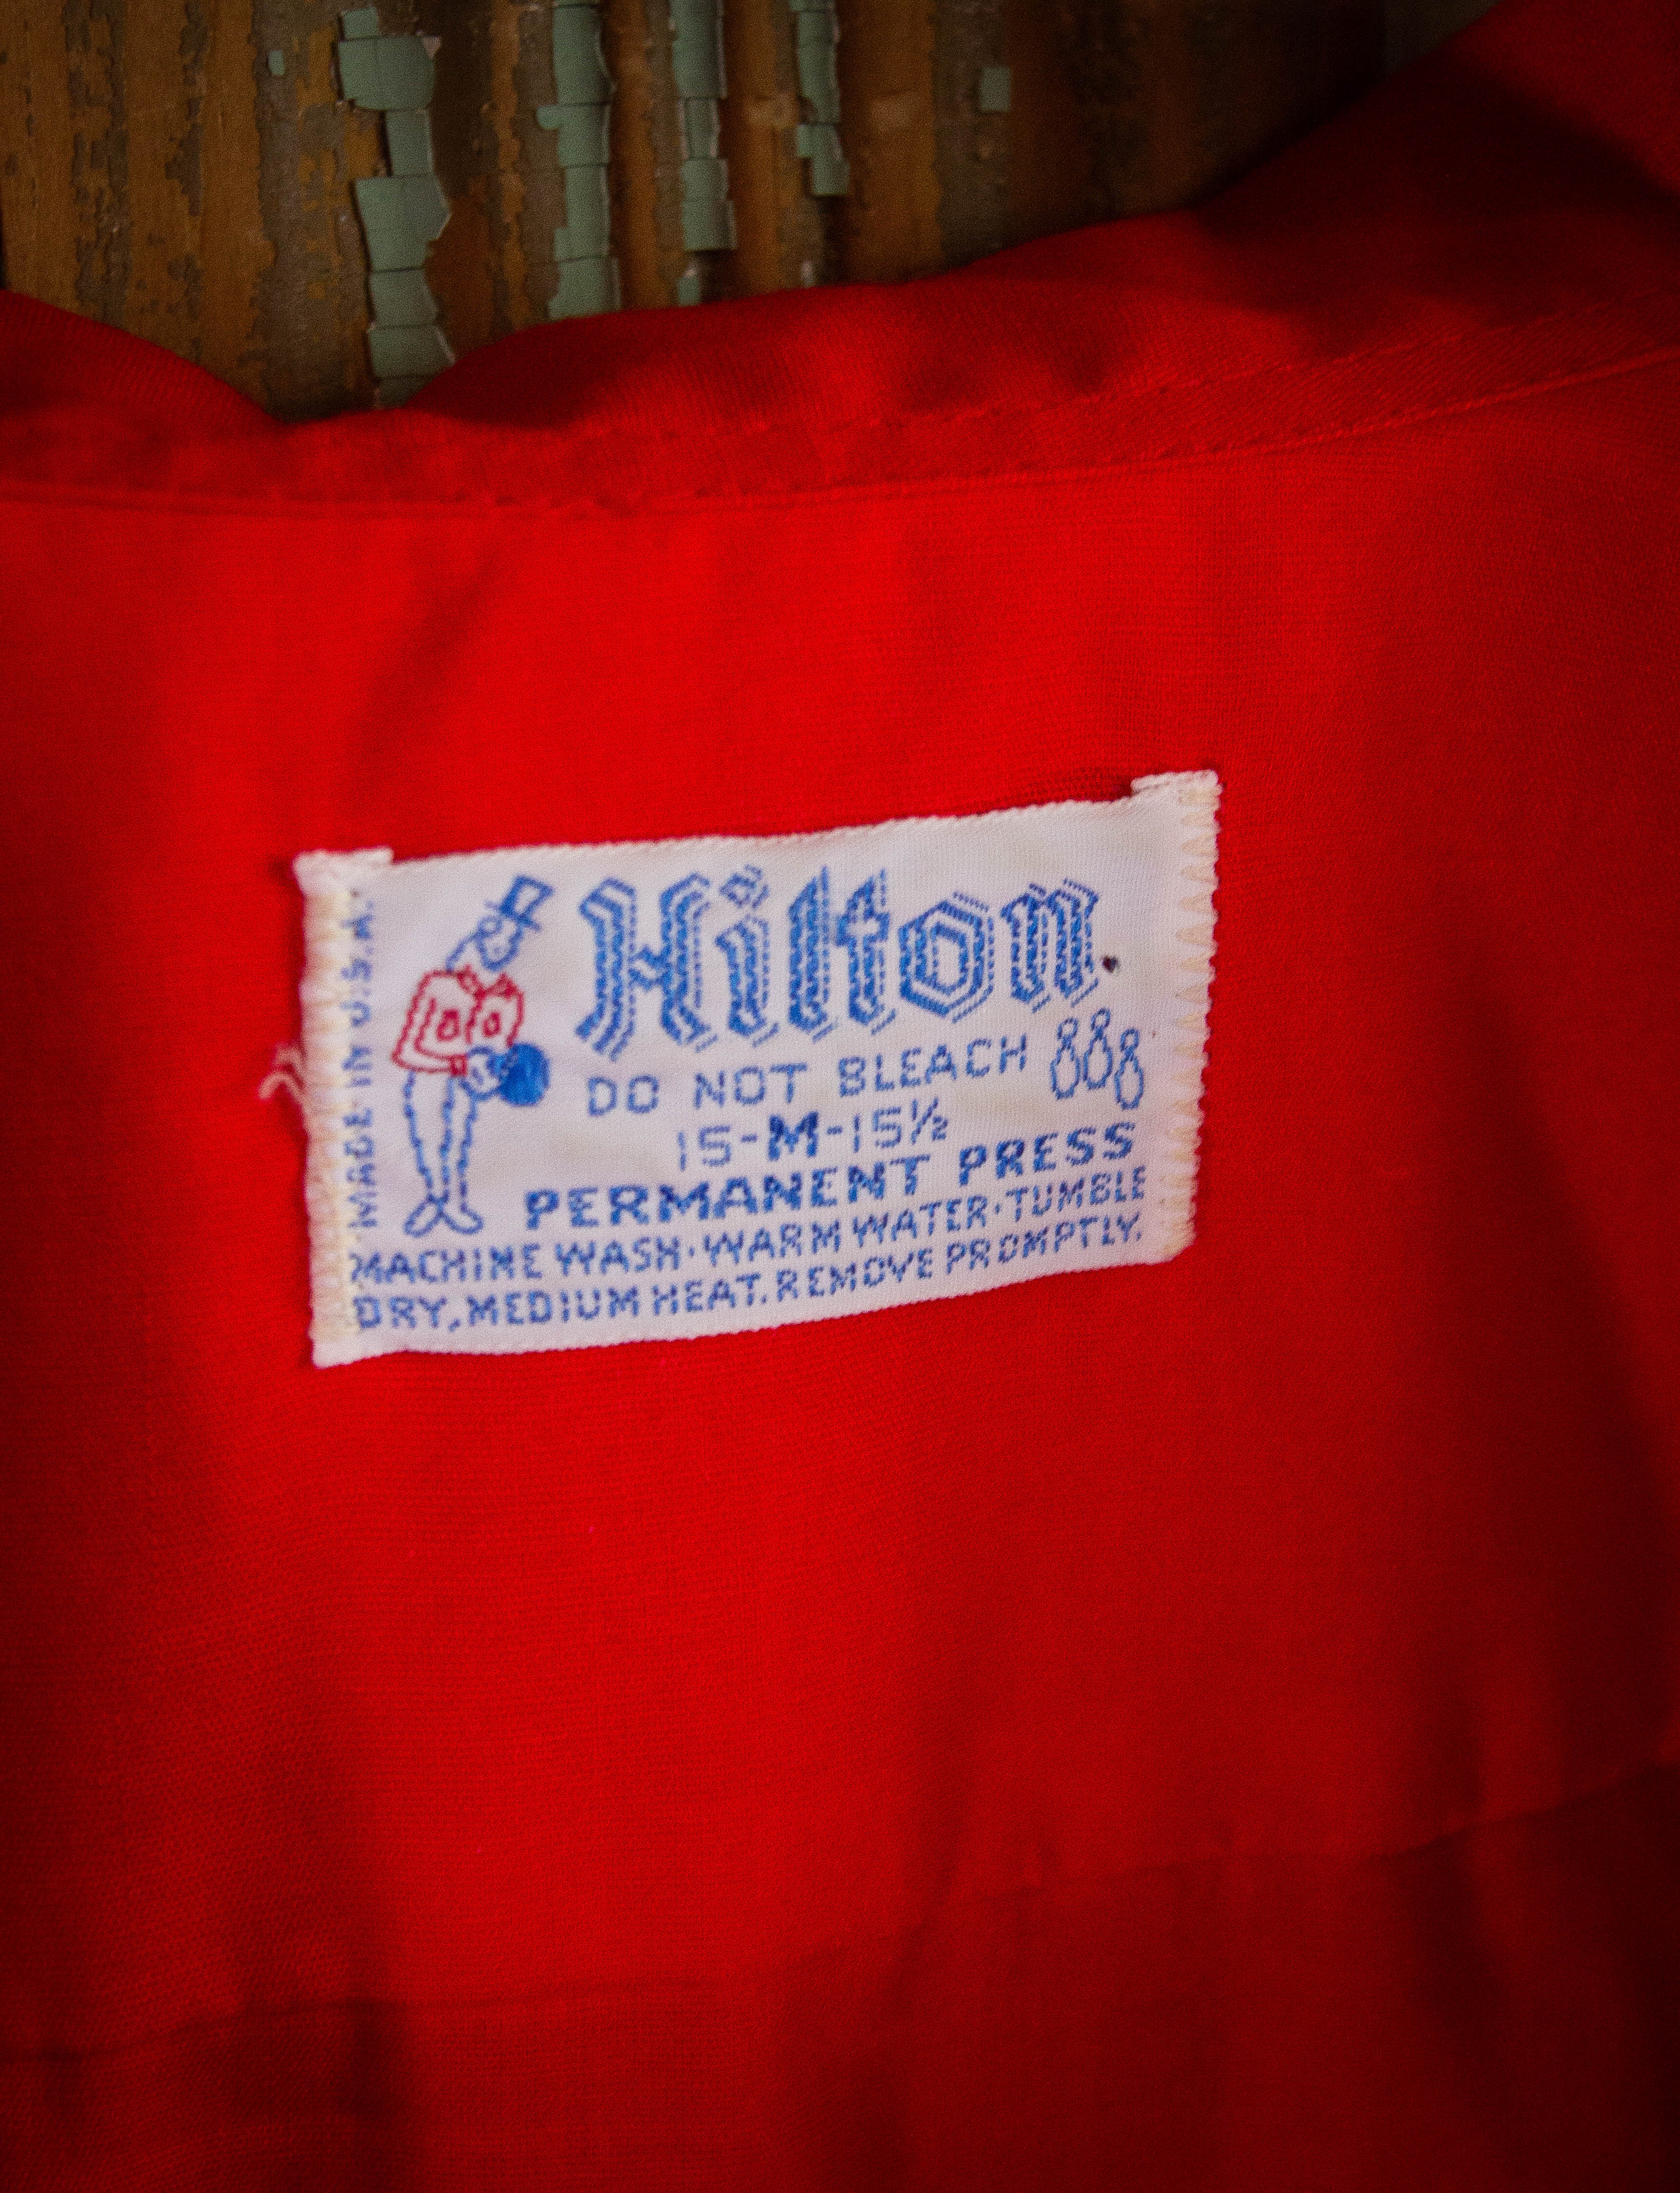 Vintage Hilton Better BILT Aluminum Bowling Shirt 60s Red Medium ...